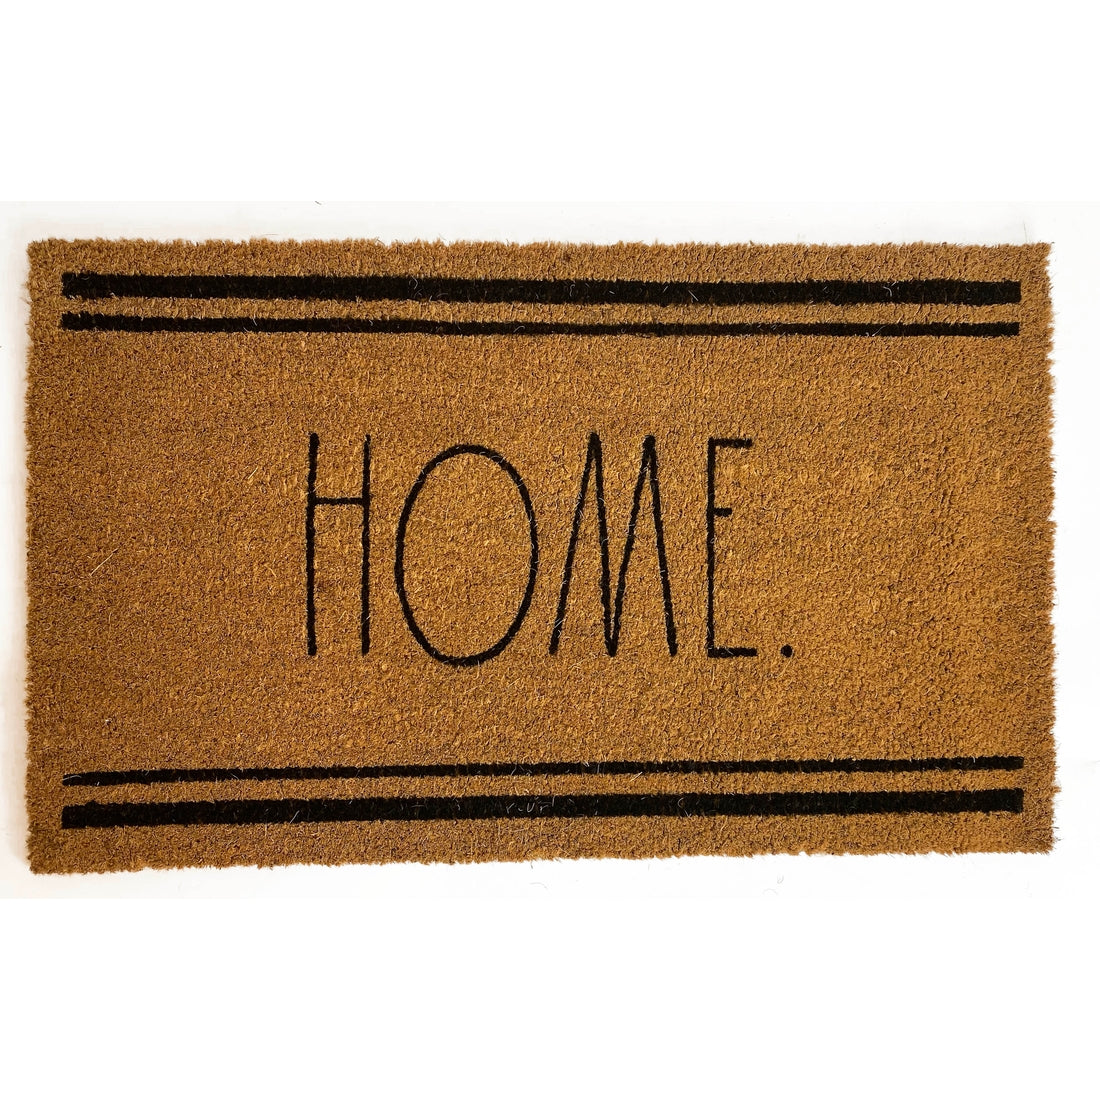 Rae Dunn “Home” 30 x 18 Waterproof Brown Welcome Doormat